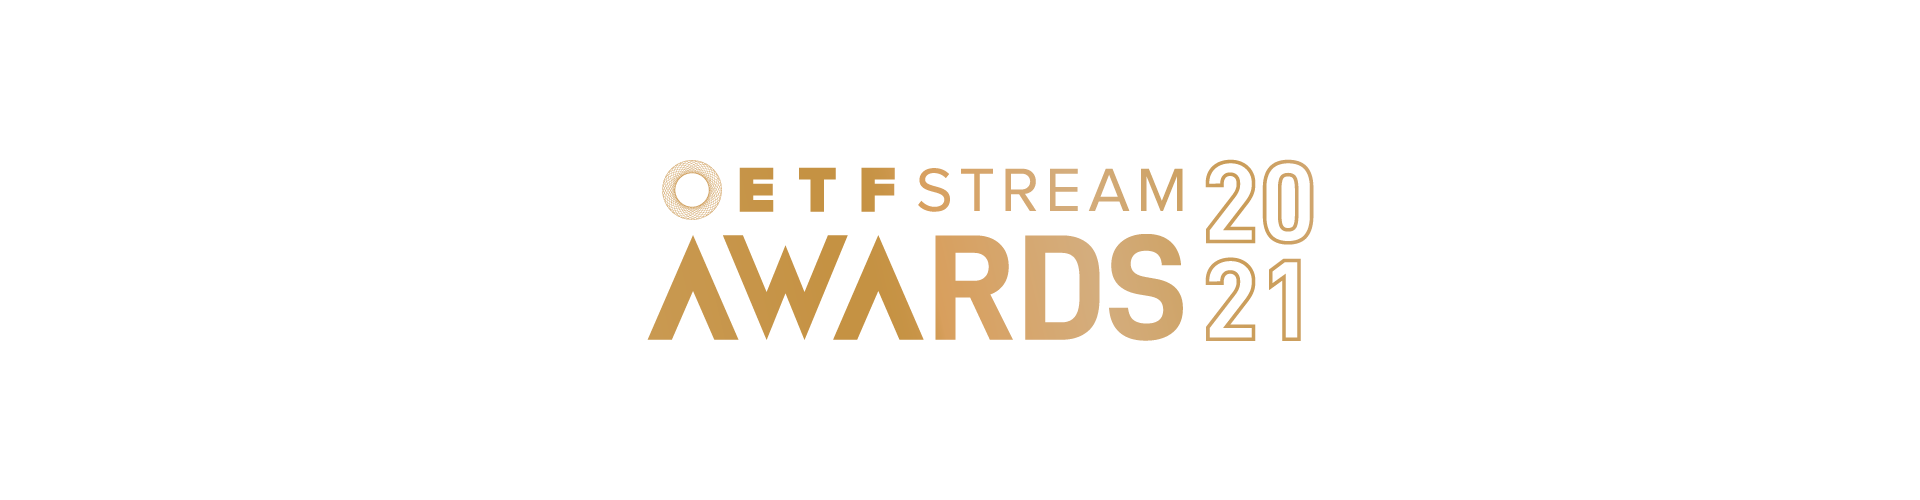 etf-stream-awards-2021